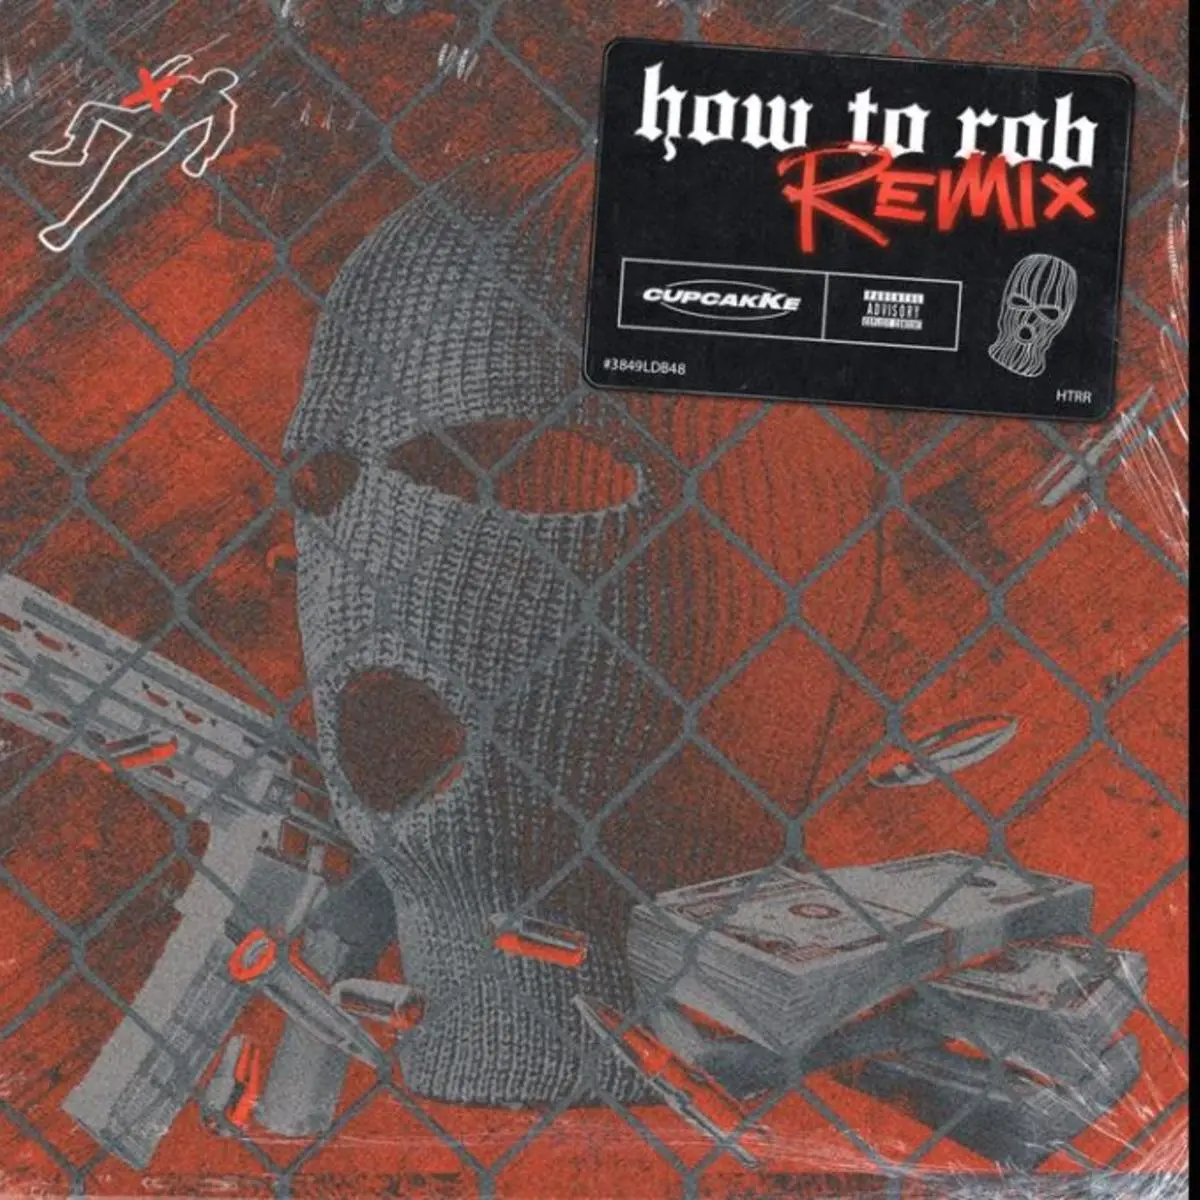 CupcakKe — How to Rob (Remix) cover artwork